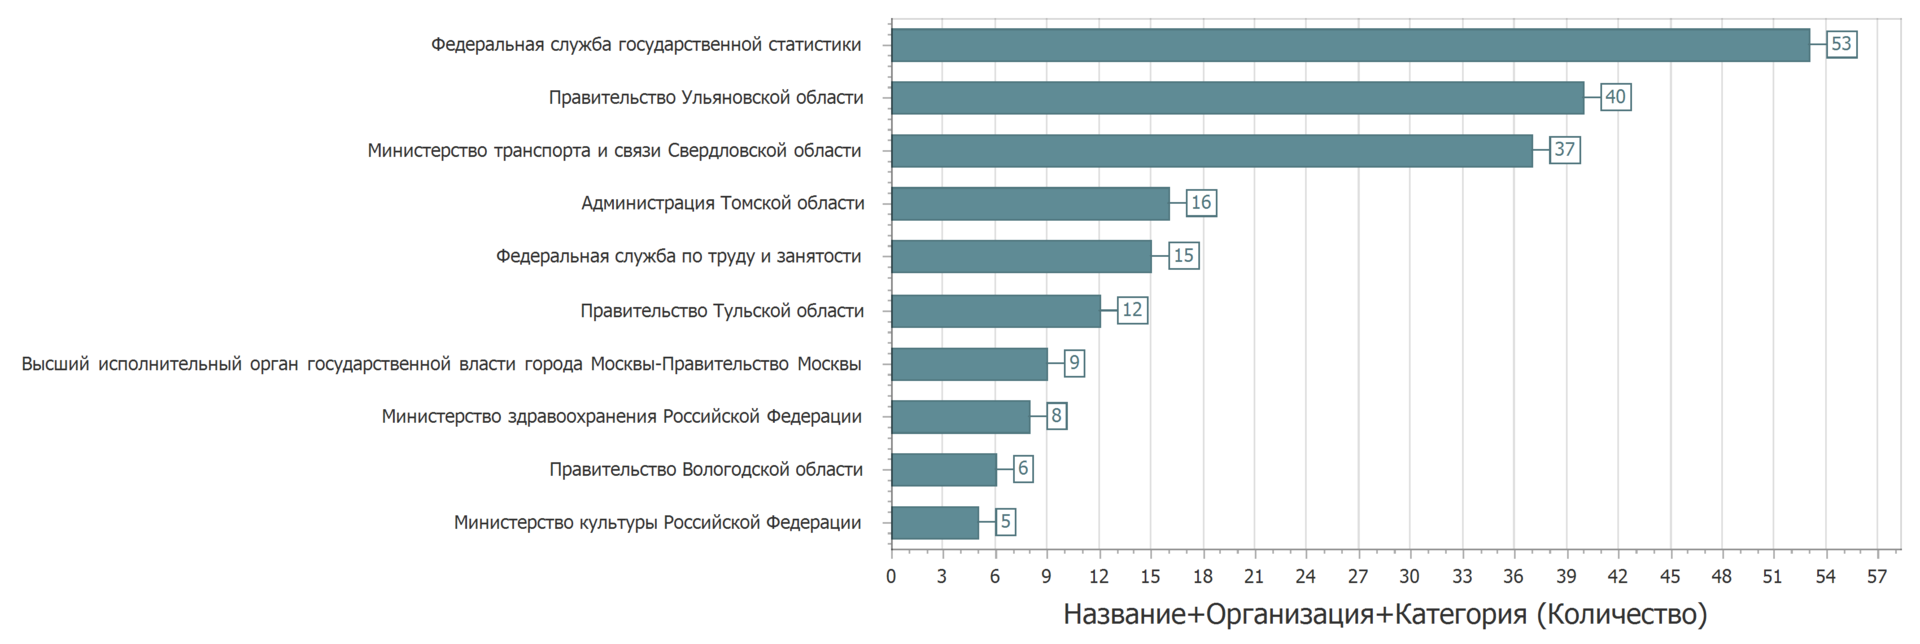 Open data gov и анализ наборов данных с портала открытых данных data.gov.ru